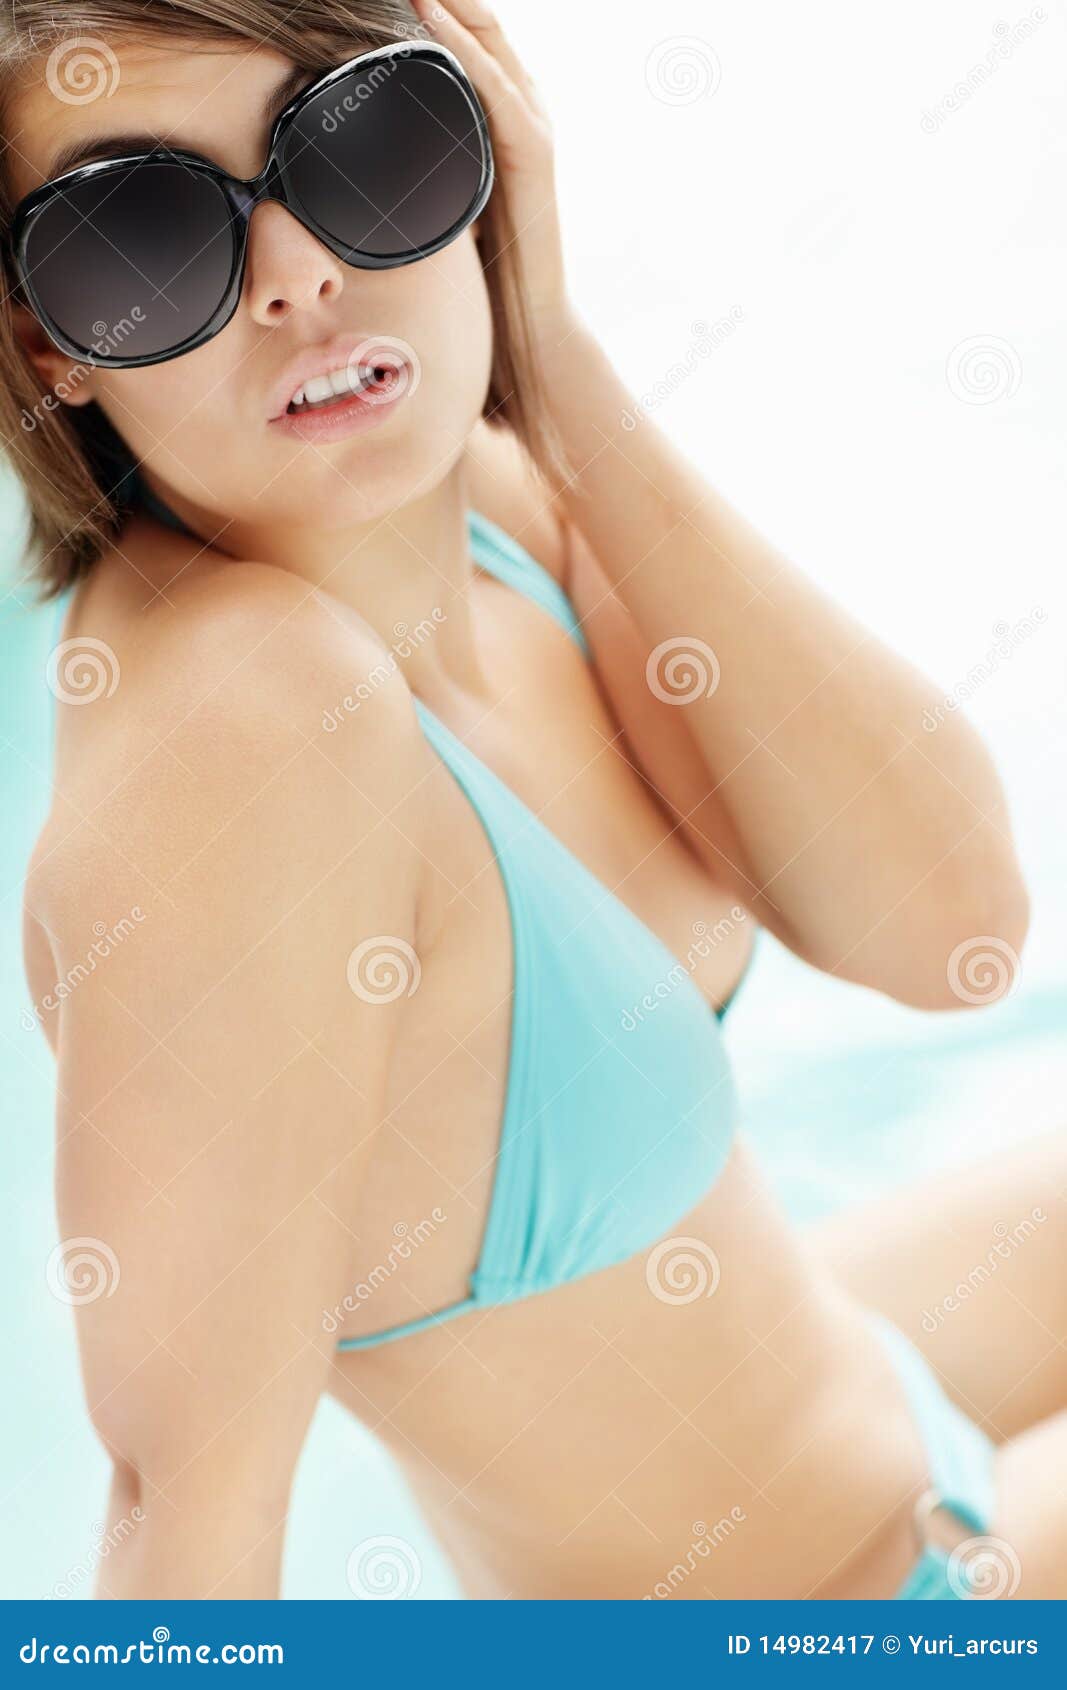 Female In Bikini Wearing Sunglasses And Relaxing Stock Image Image Of 